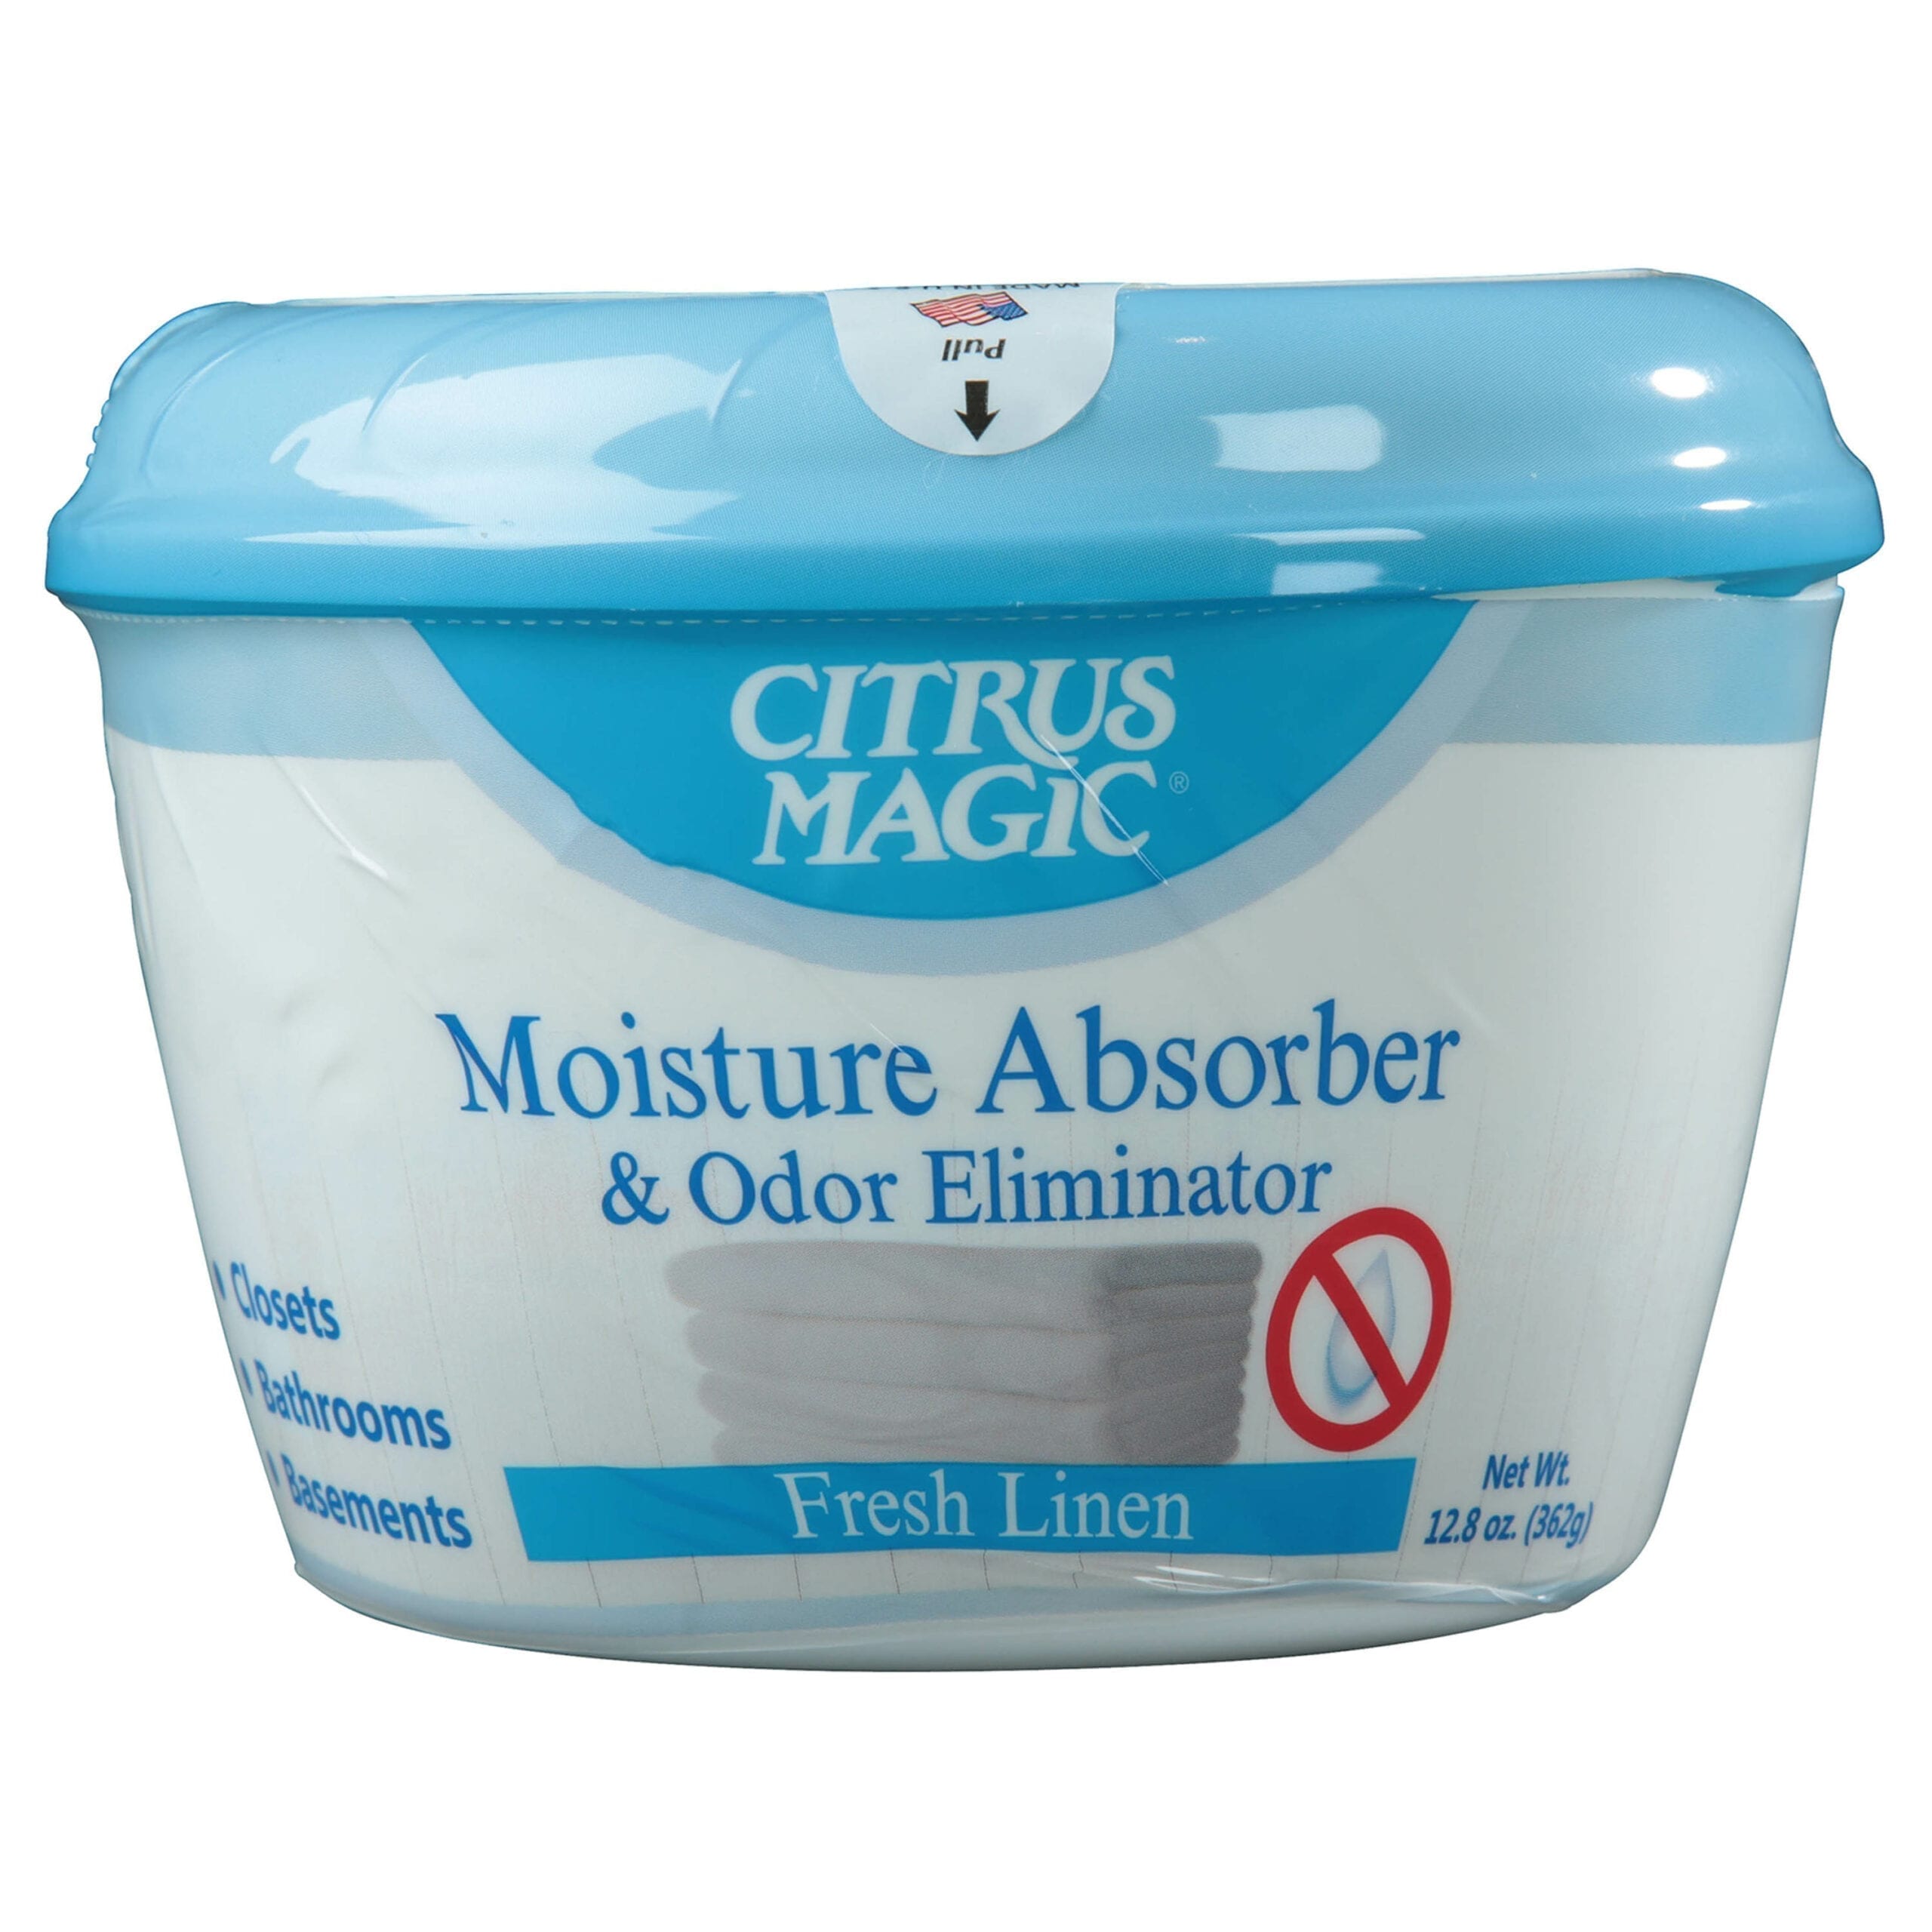 Citrus Magic Moisture Absorber and Odor Eliminator, Pure Linen